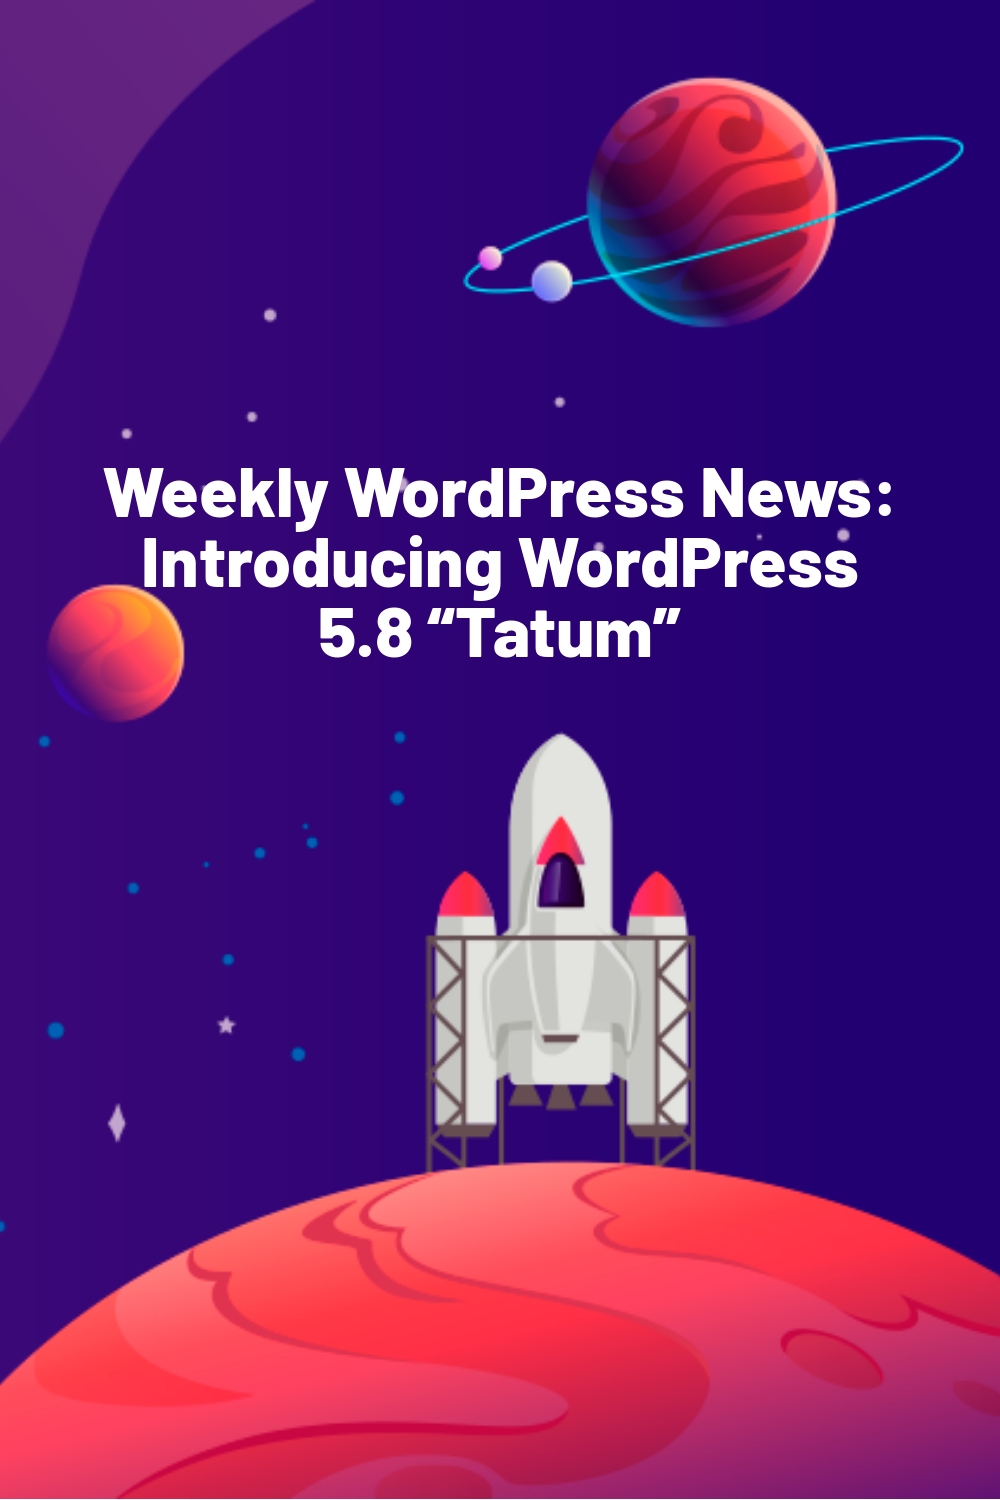 Weekly WordPress News: Introducing WordPress 5.8 “Tatum”